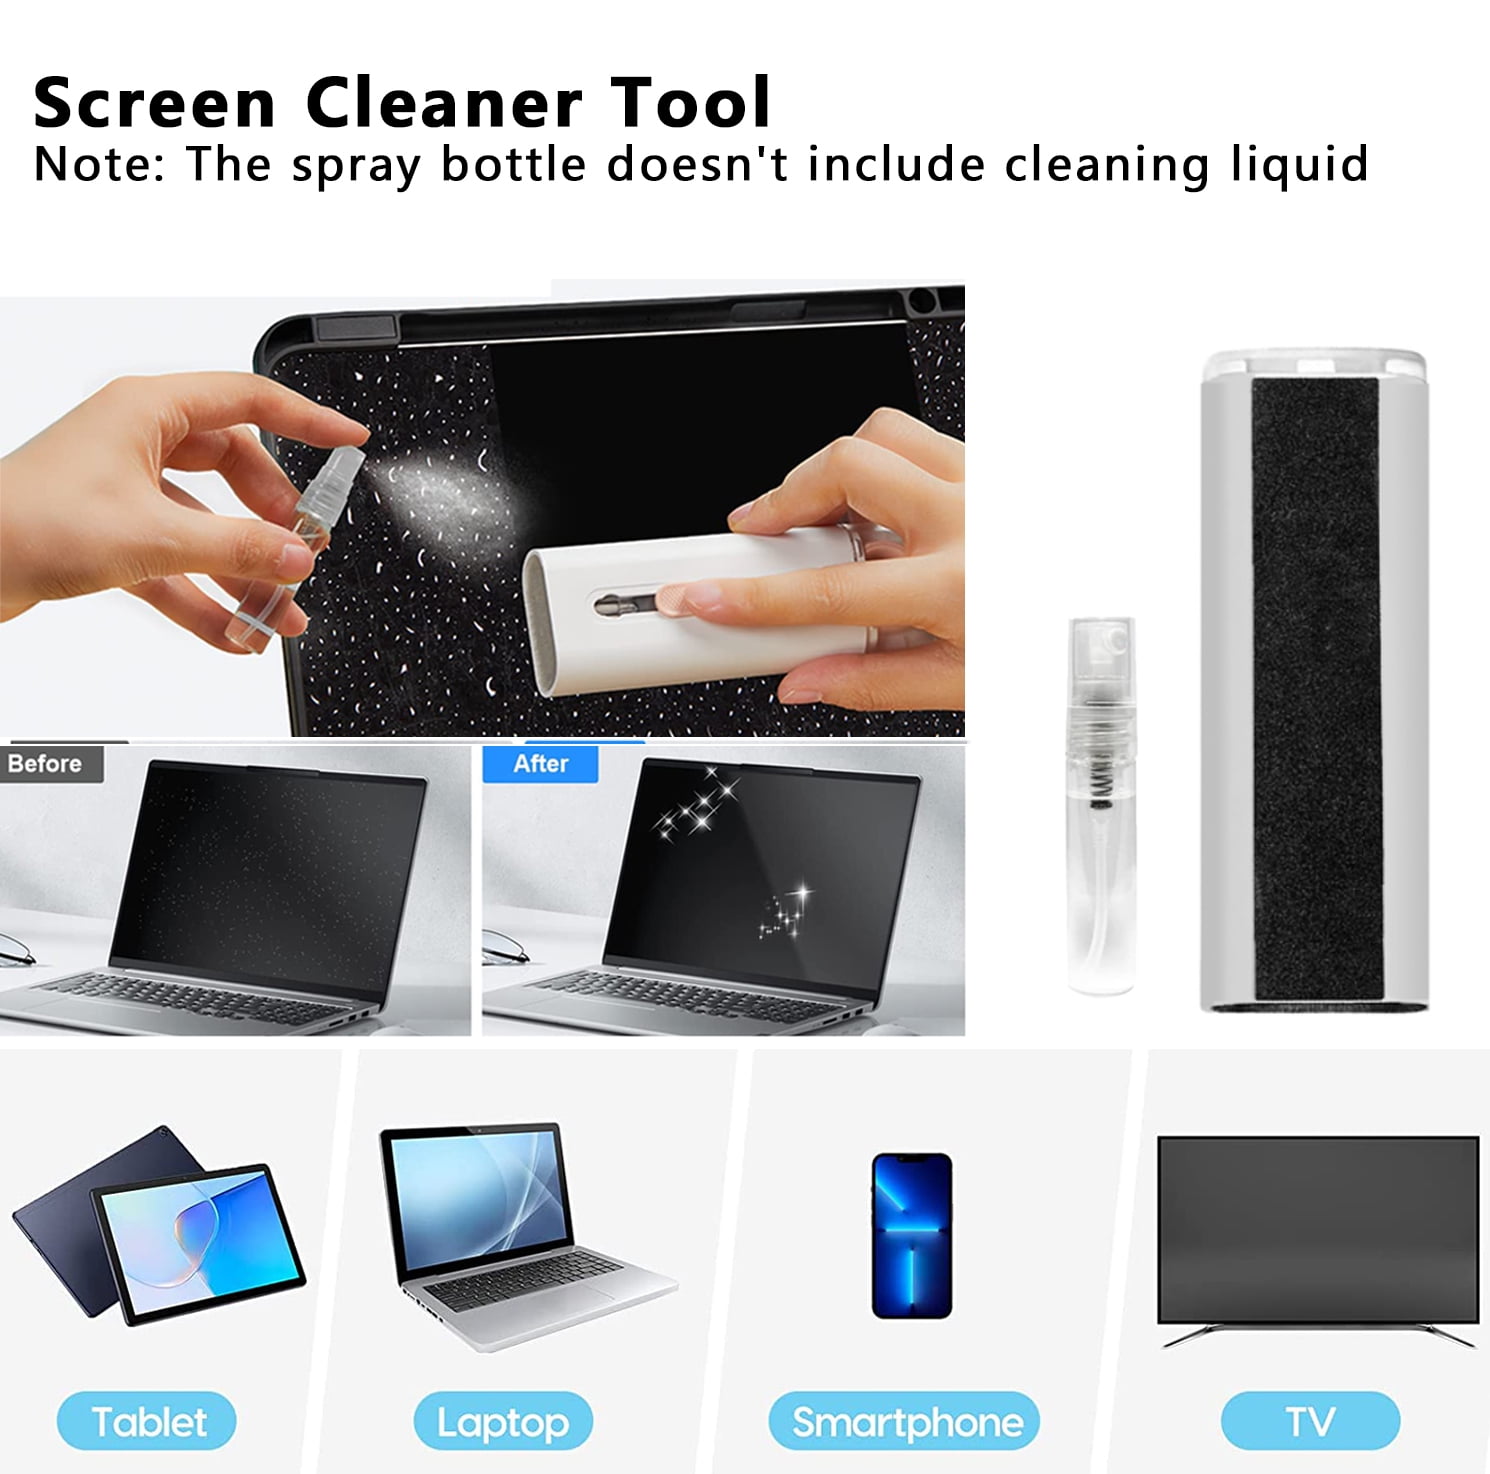 7 in 1 Cleaner Brush Kit – Zentric Store